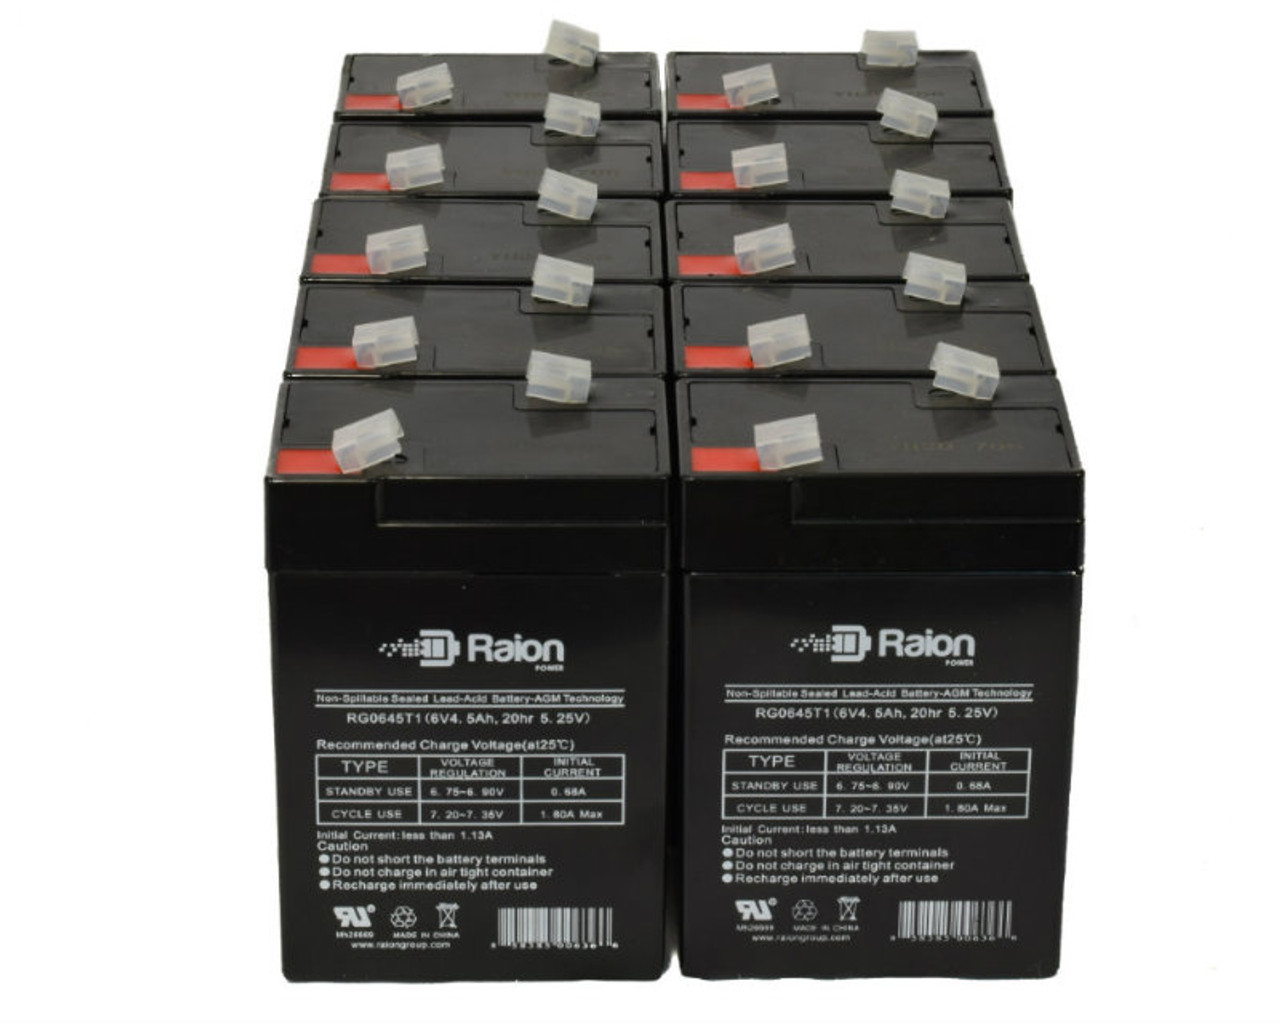 Raion Power 6V 4.5Ah Replacement Emergency Light Battery for Sentry Lite 09-985 - 10 Pack